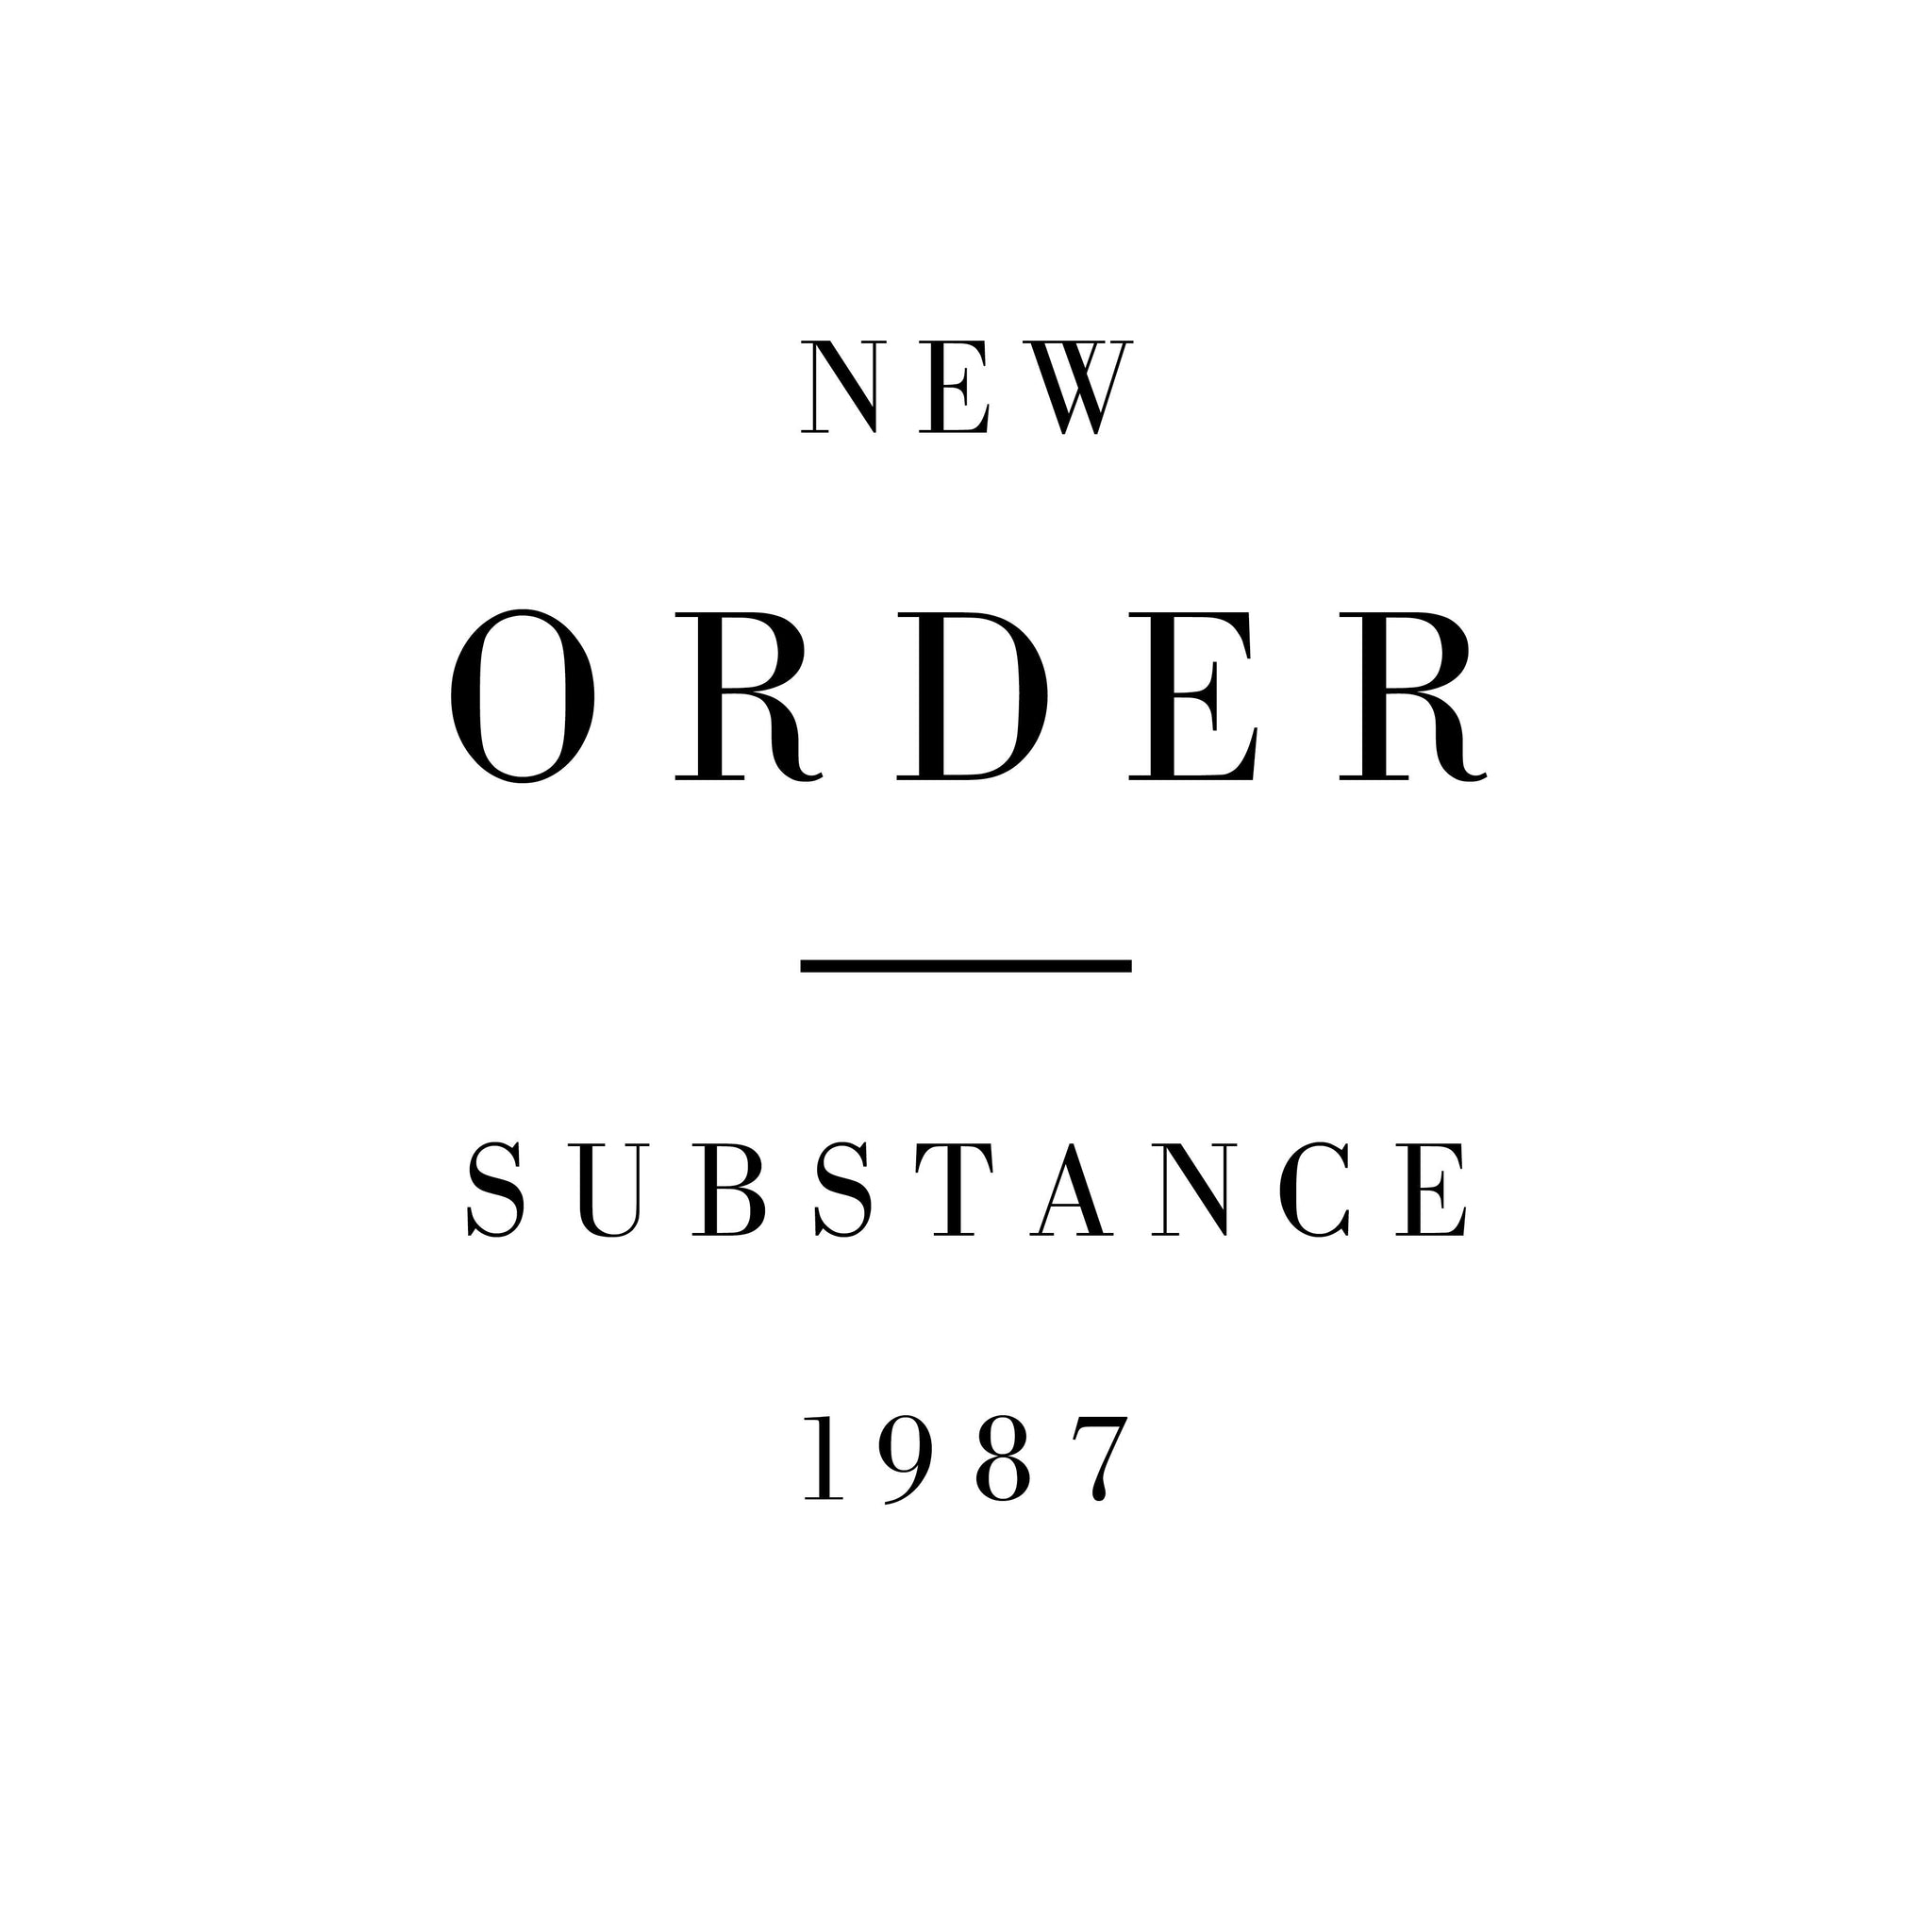 NEW ORDER - Substance '87 (Remastered) - 2CD